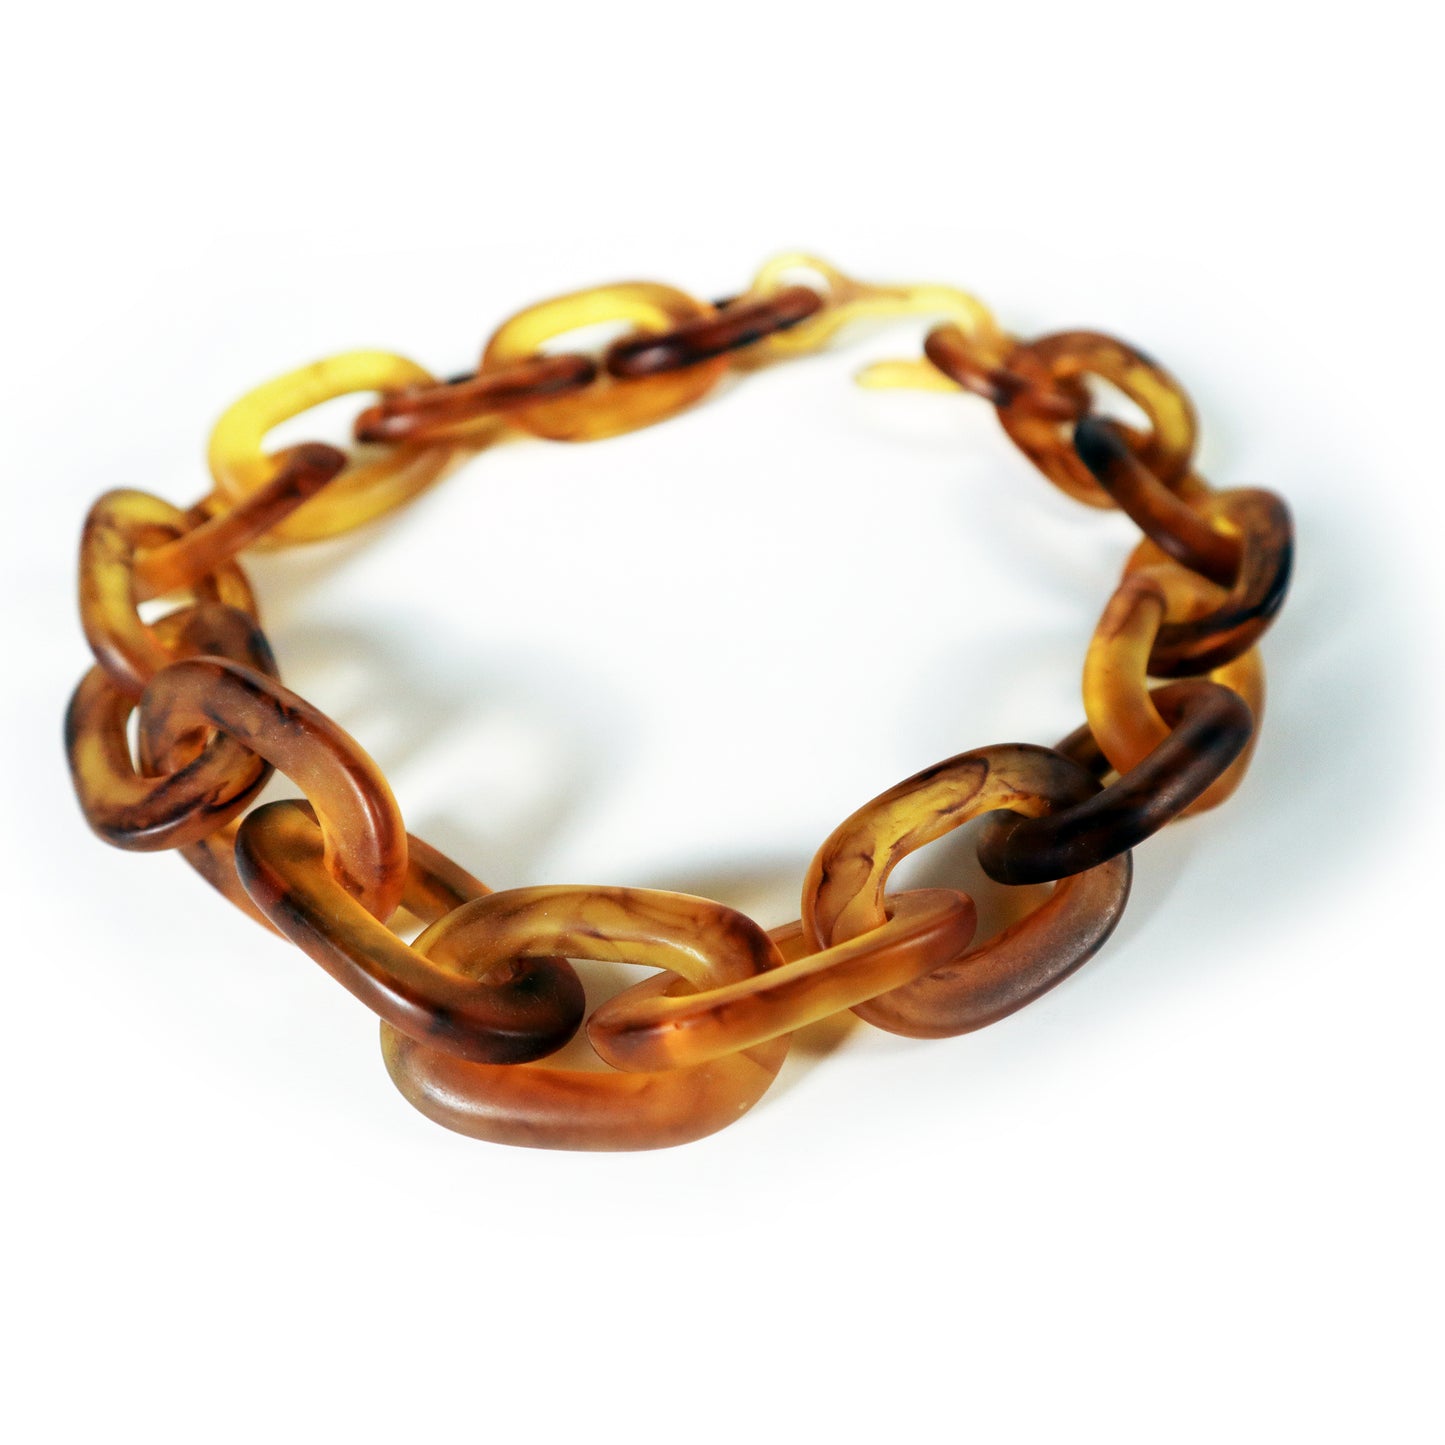 Medium Chain Resin Necklace - Honey